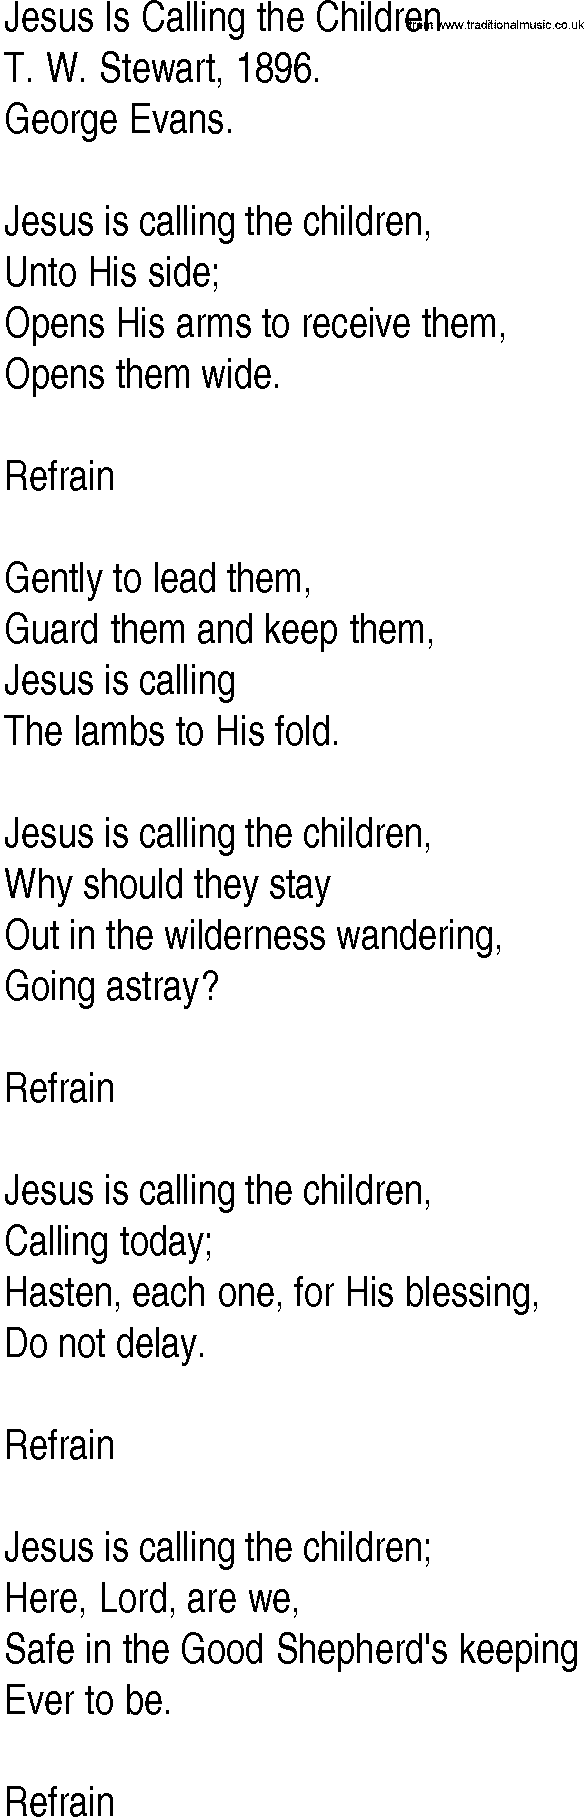 Hymn and Gospel Song: Jesus Is Calling the Children by T W Stewart lyrics